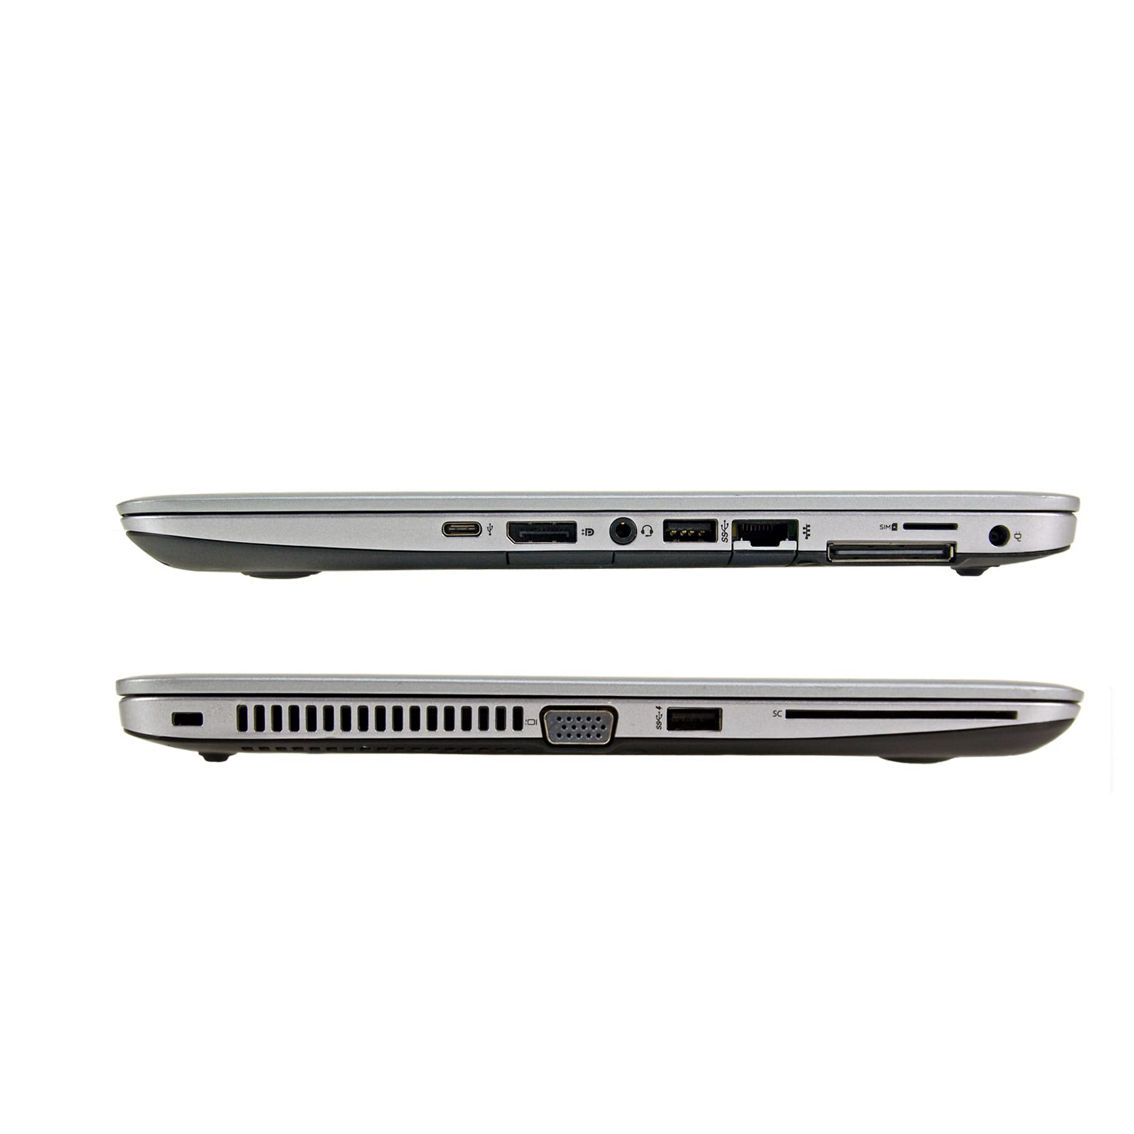 HP 840 G3 Core i5-6300U 2.4GHz 16GB Ram 512GB SSD Laptop (Refurbished) - Image 3 of 4